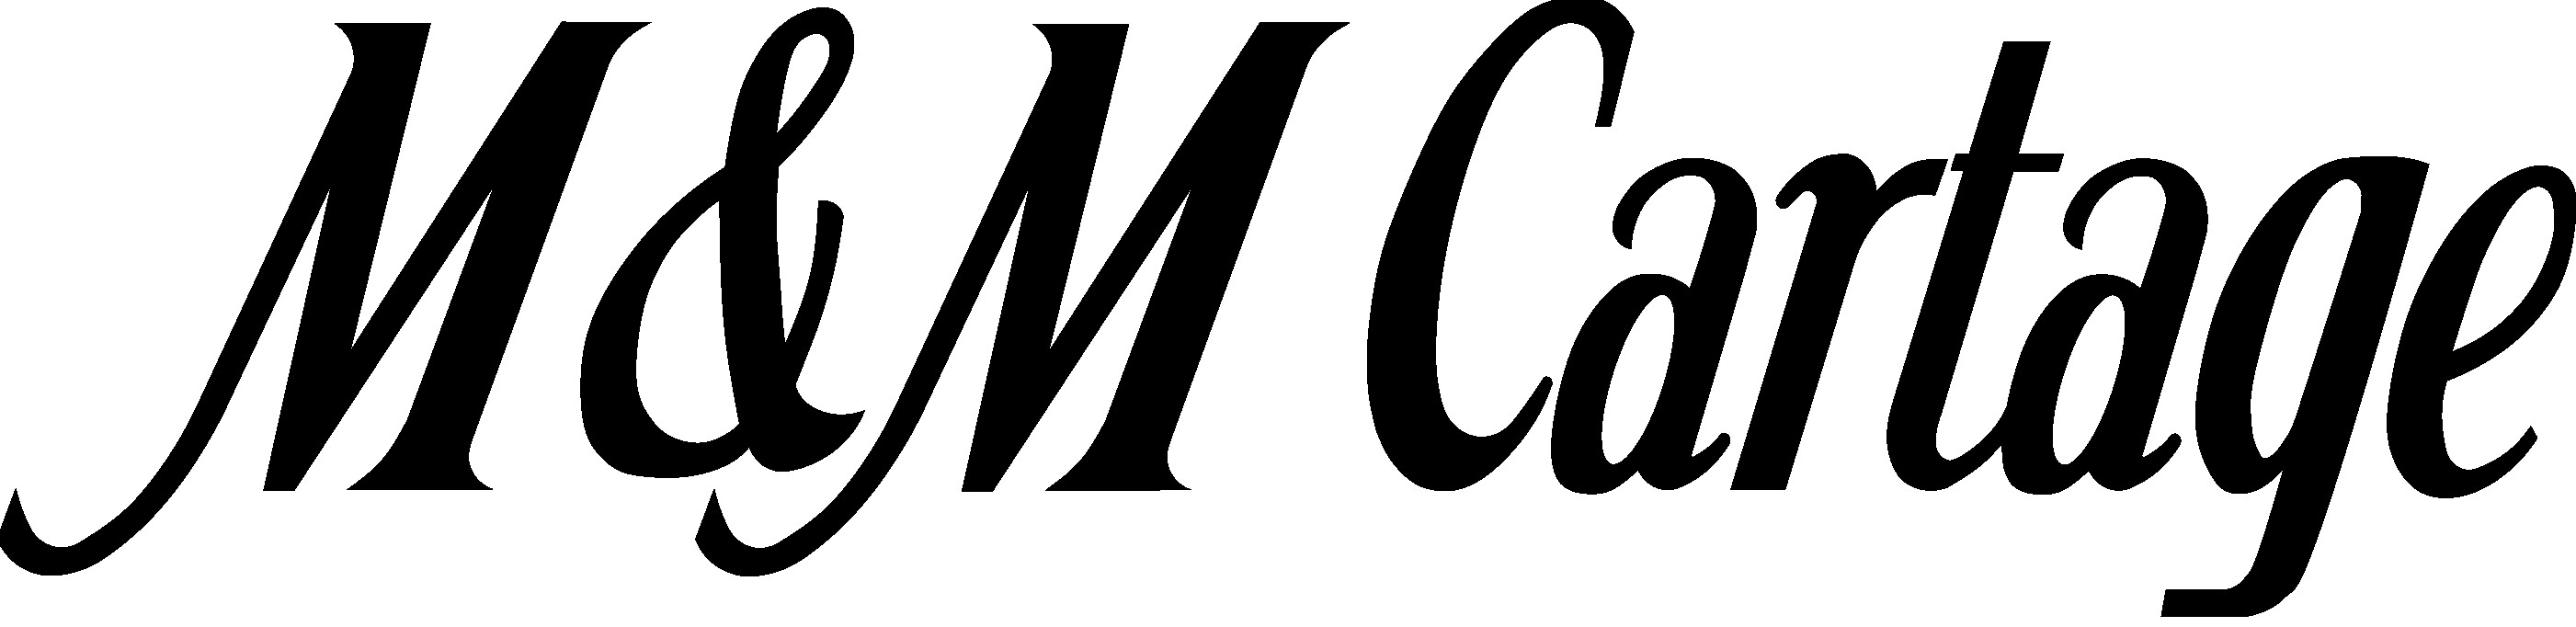 M&M Cartage Co., Inc. Company Logo